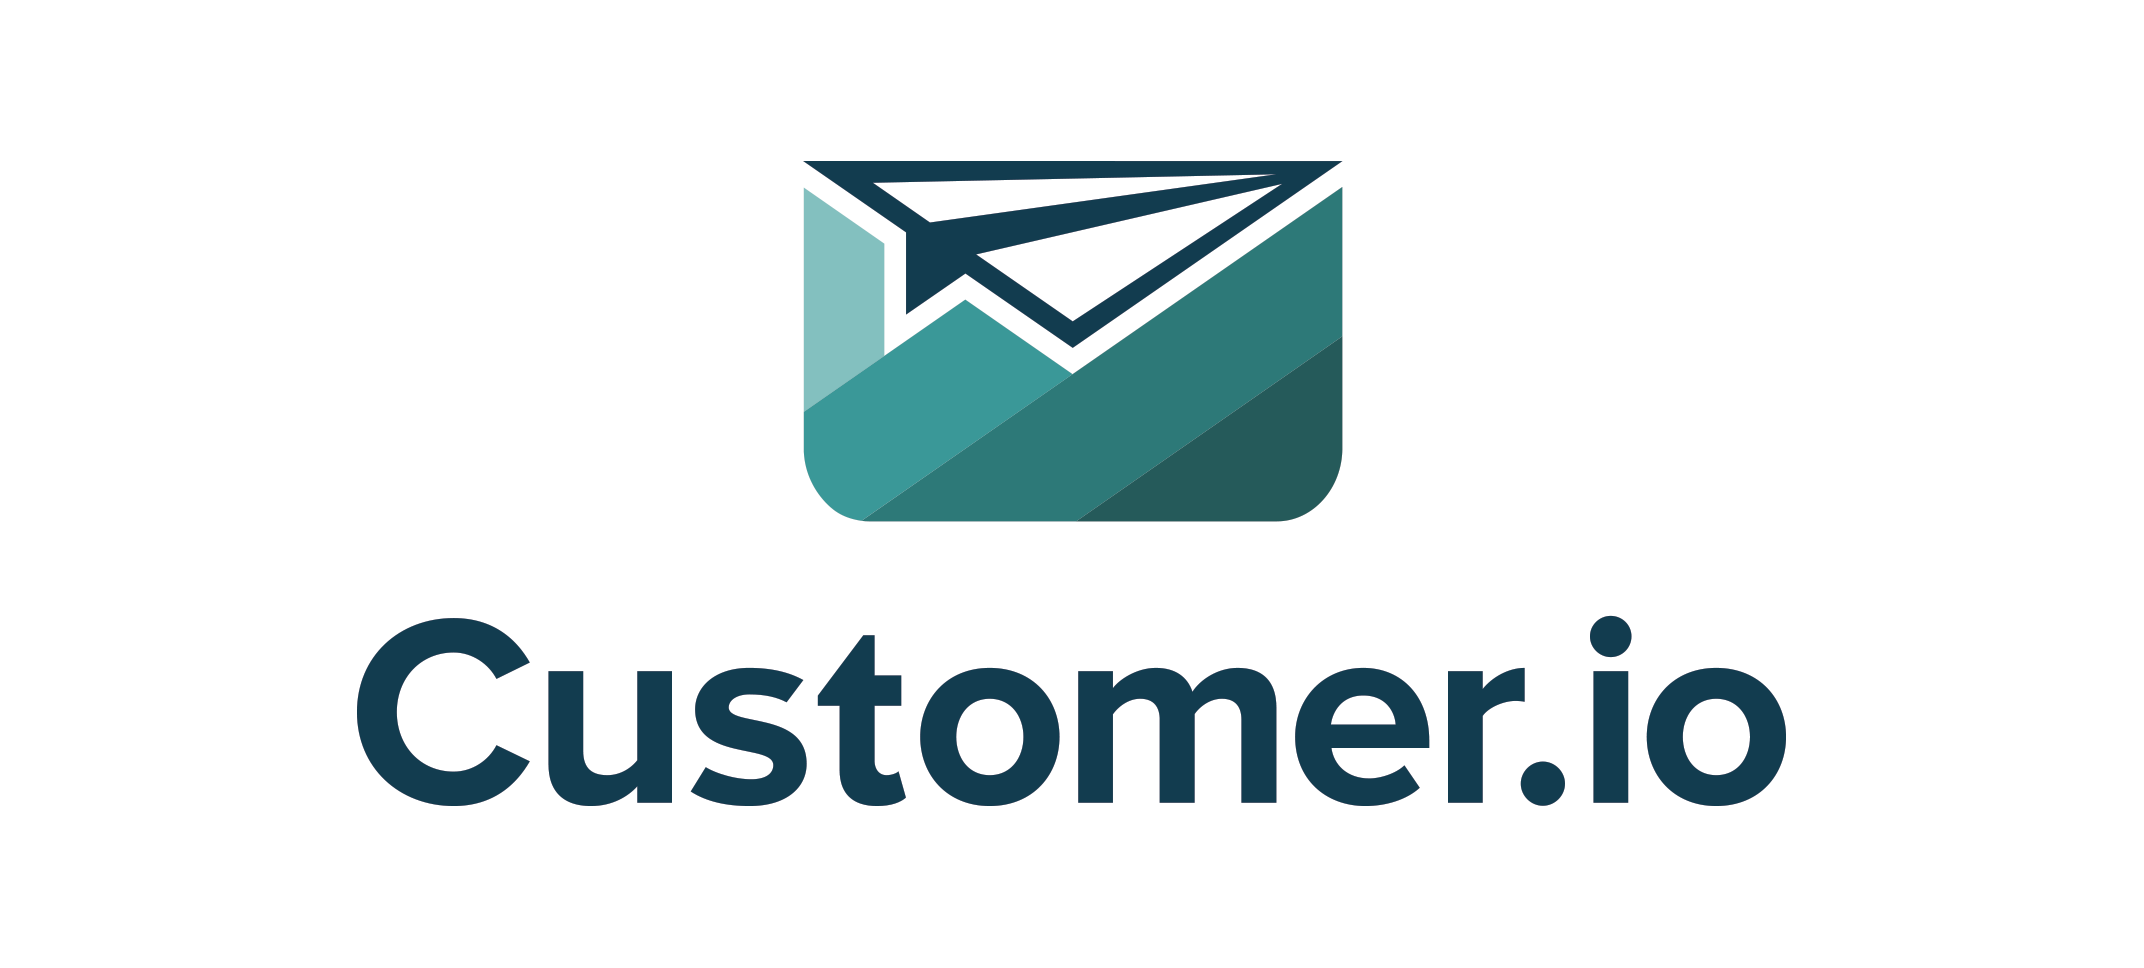 The story of Customer.io's logo | Customer.io